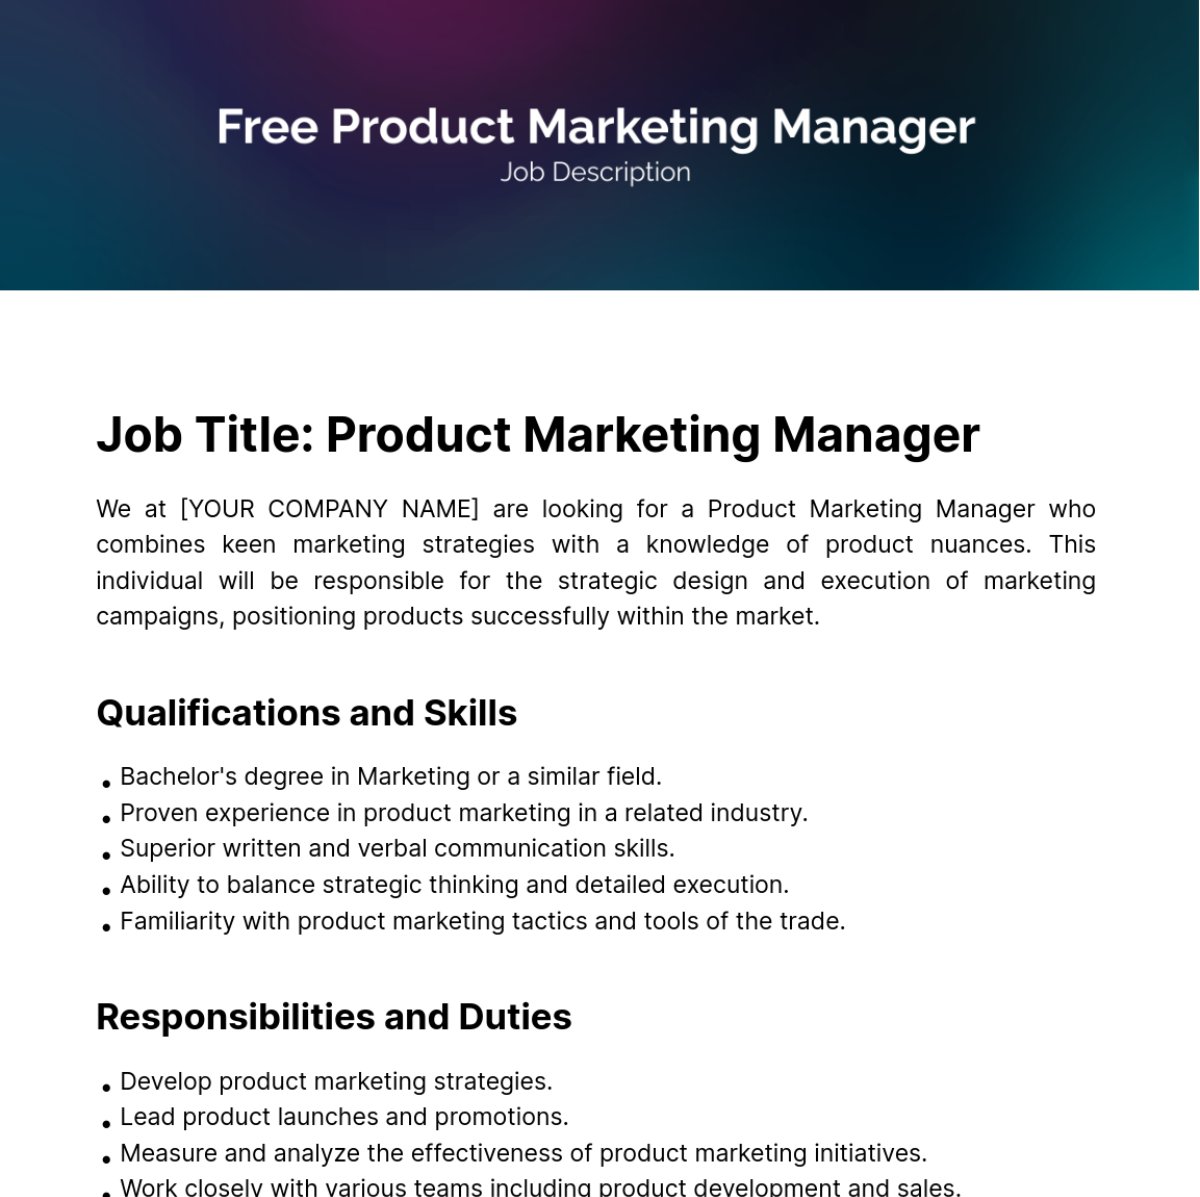 Free Product Marketing Job Description Template